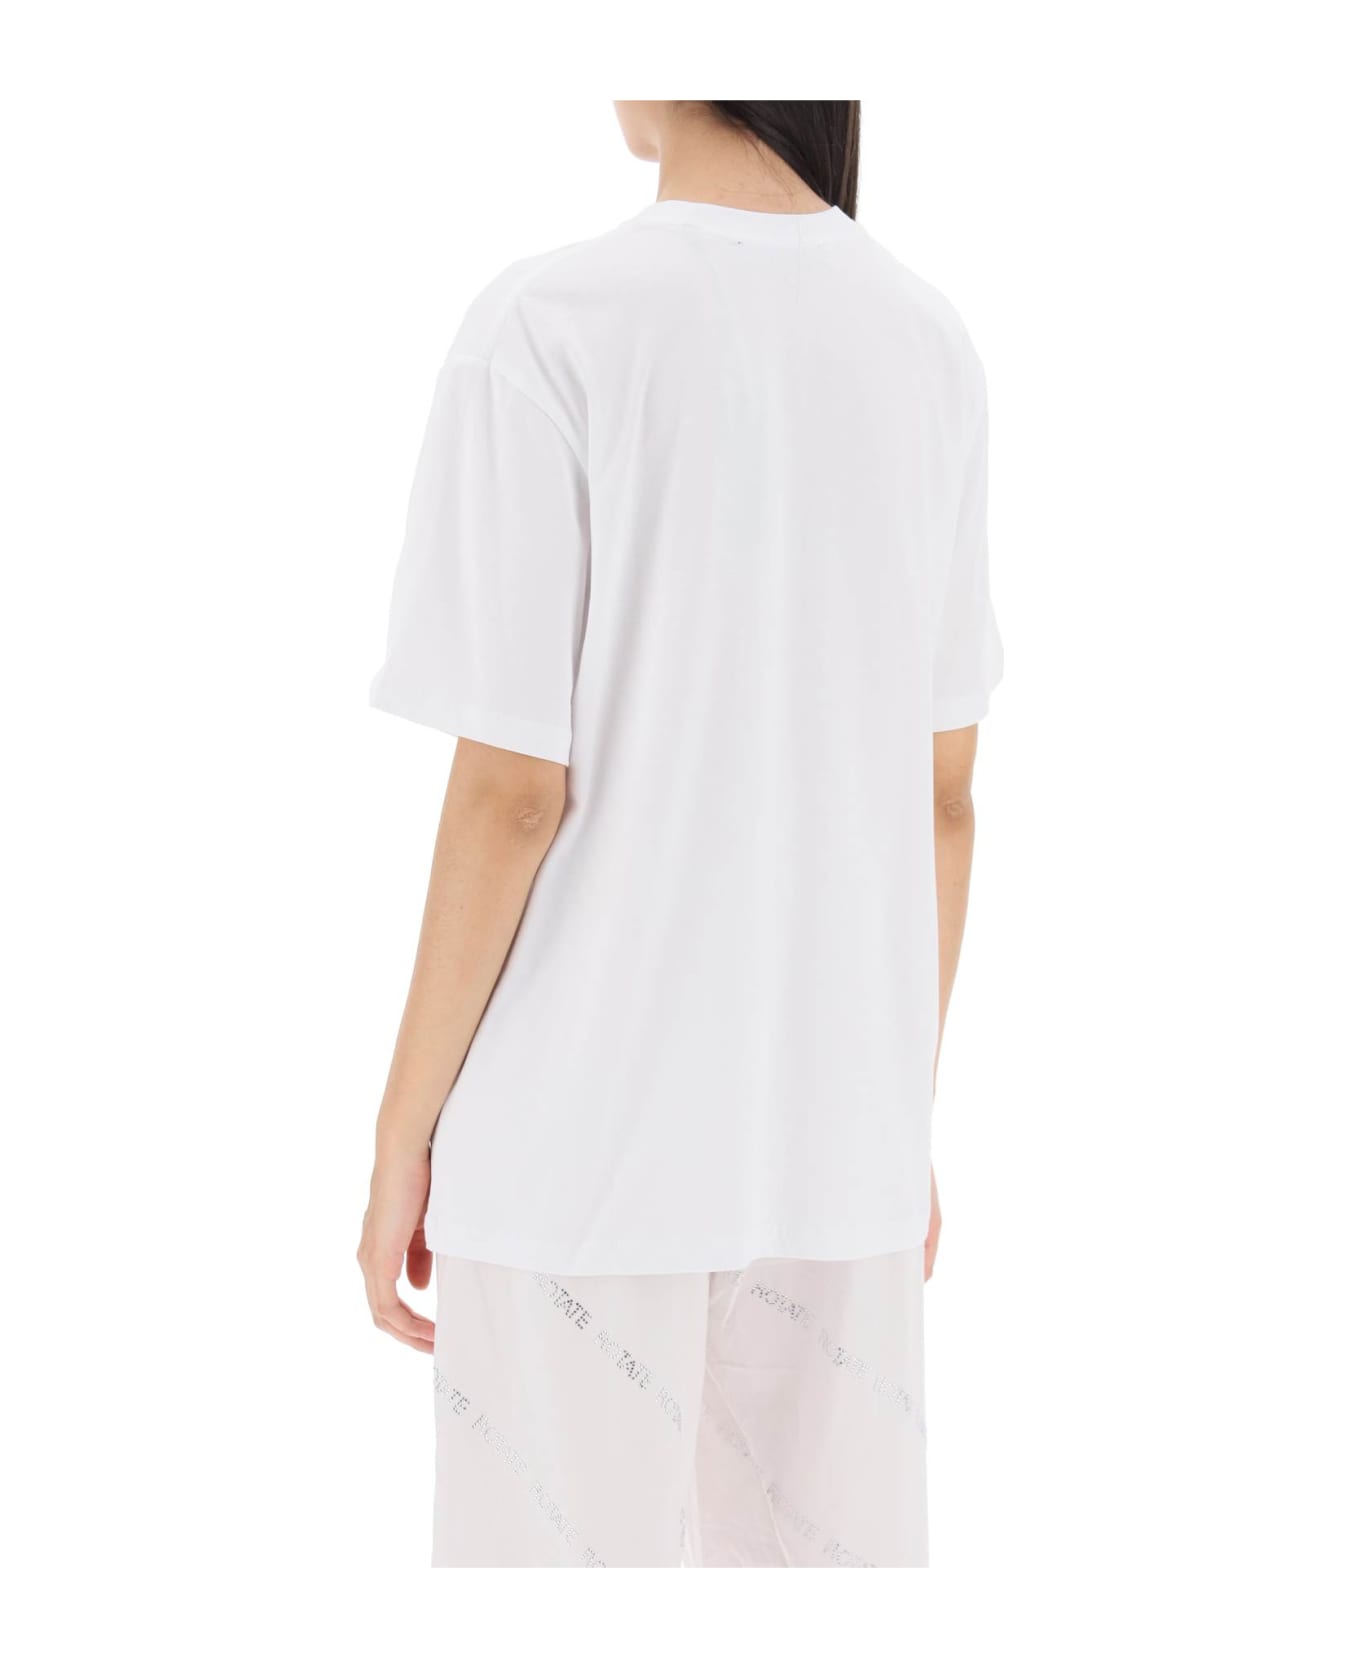 Rotate by Birger Christensen Rotate T-shirt - BRIGHT WHITE (White) Tシャツ